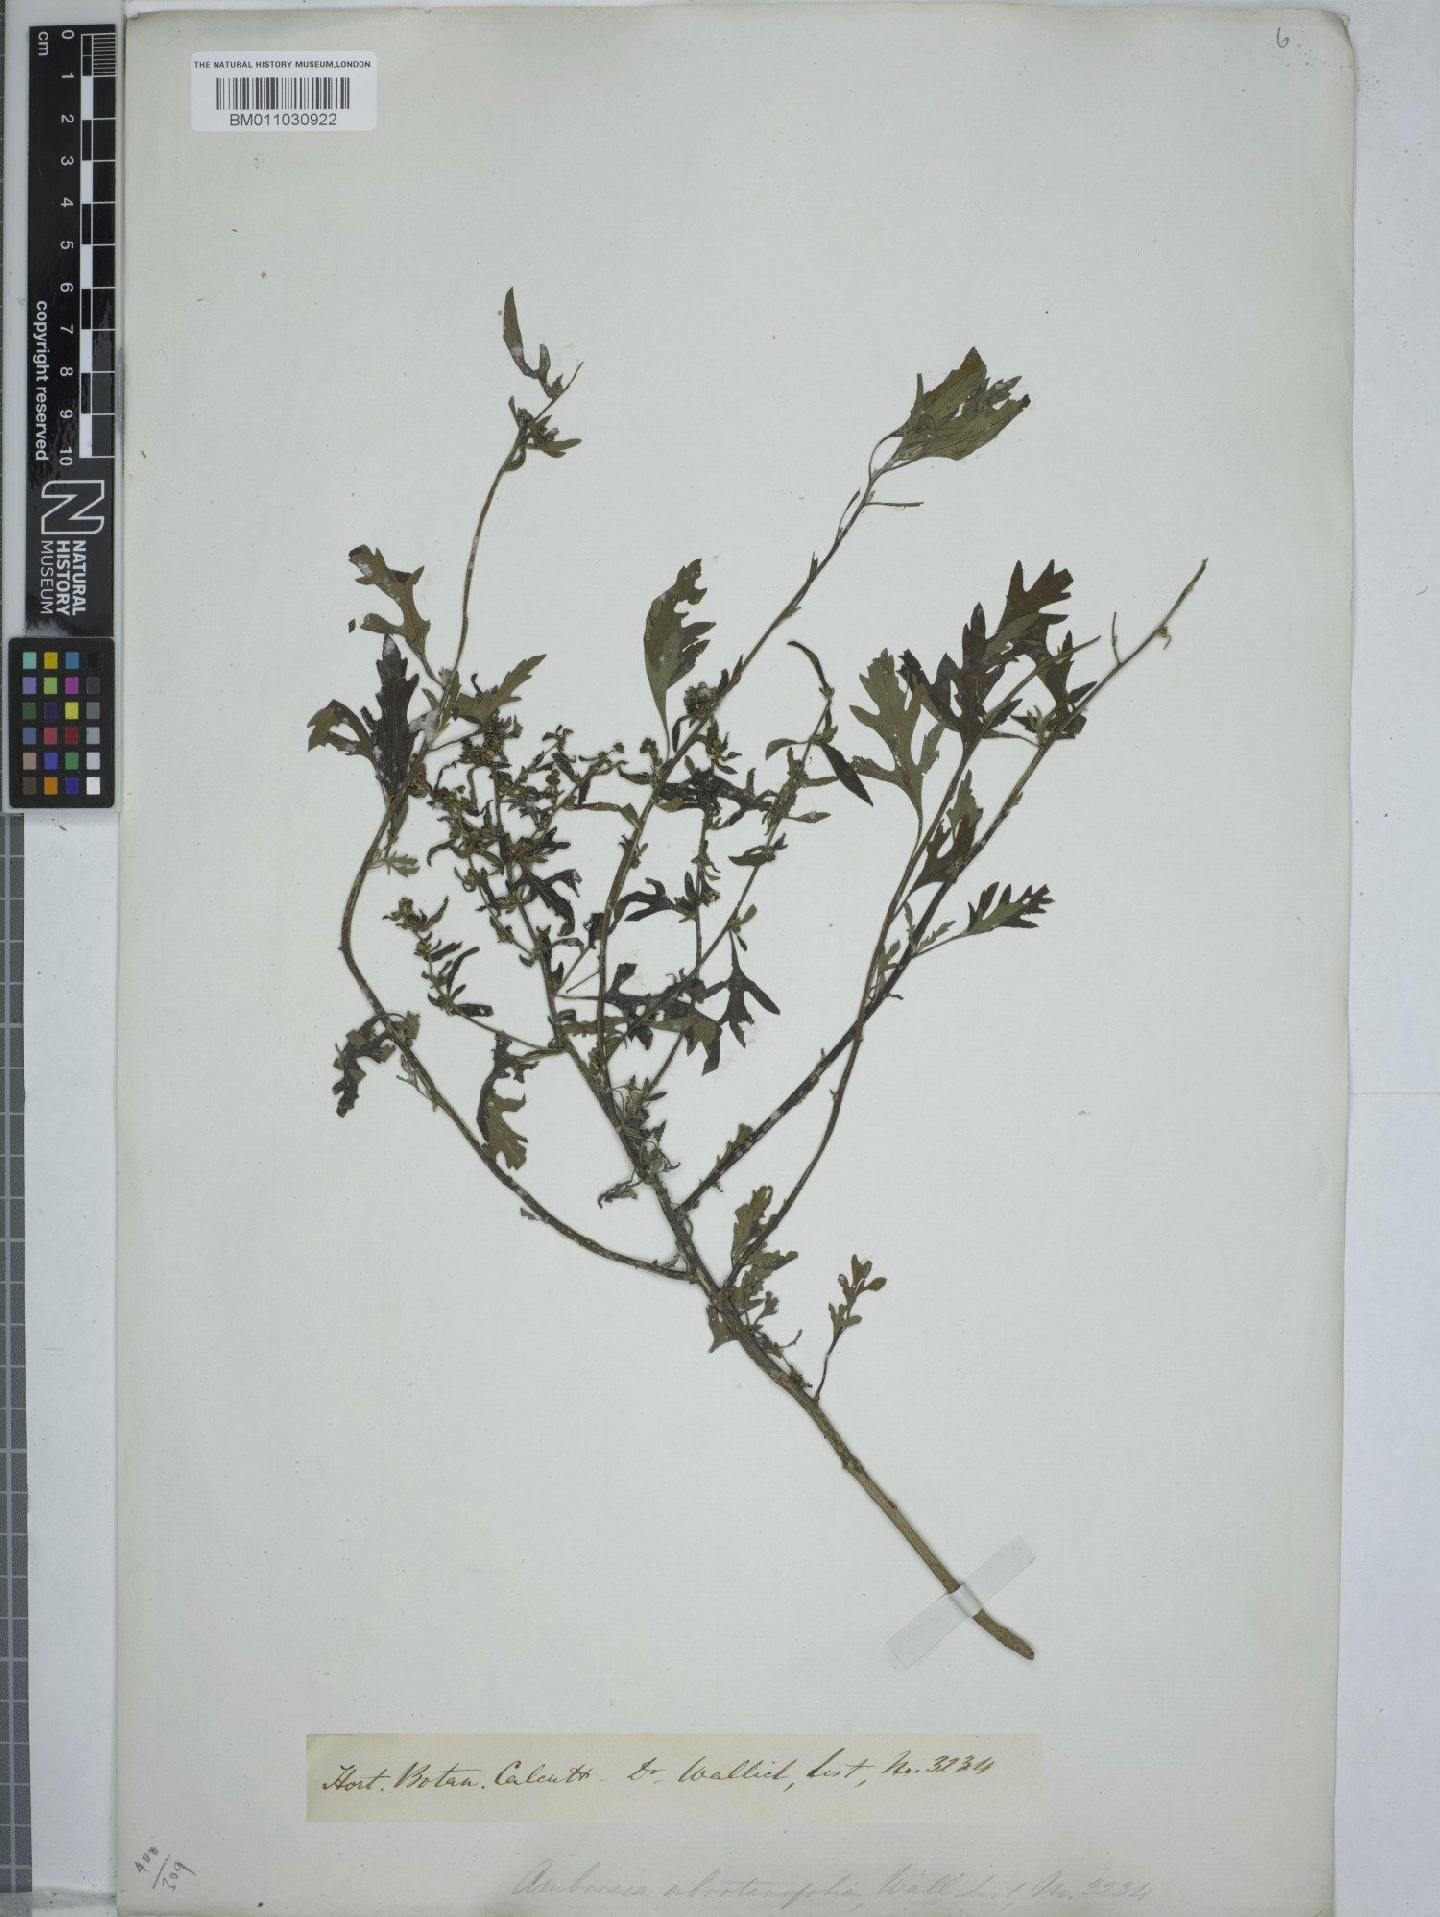 To NHMUK collection (Ambrosia abrotanifolia Wall.; NHMUK:ecatalogue:9154616)